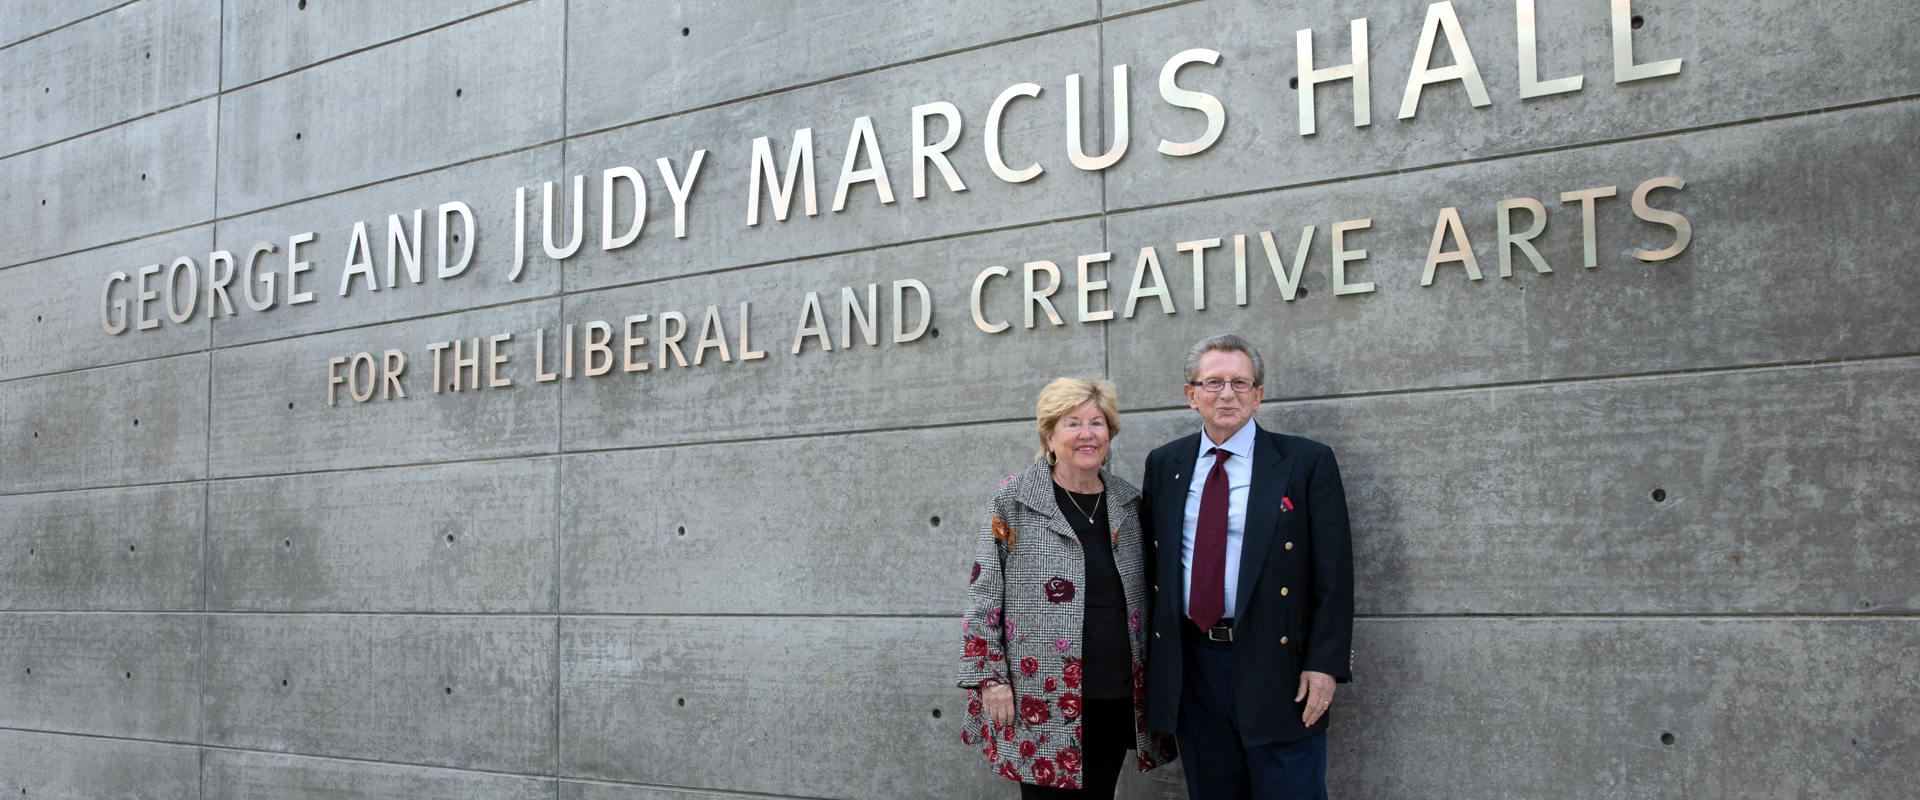 George & Judy Marcus at Marcus Hall